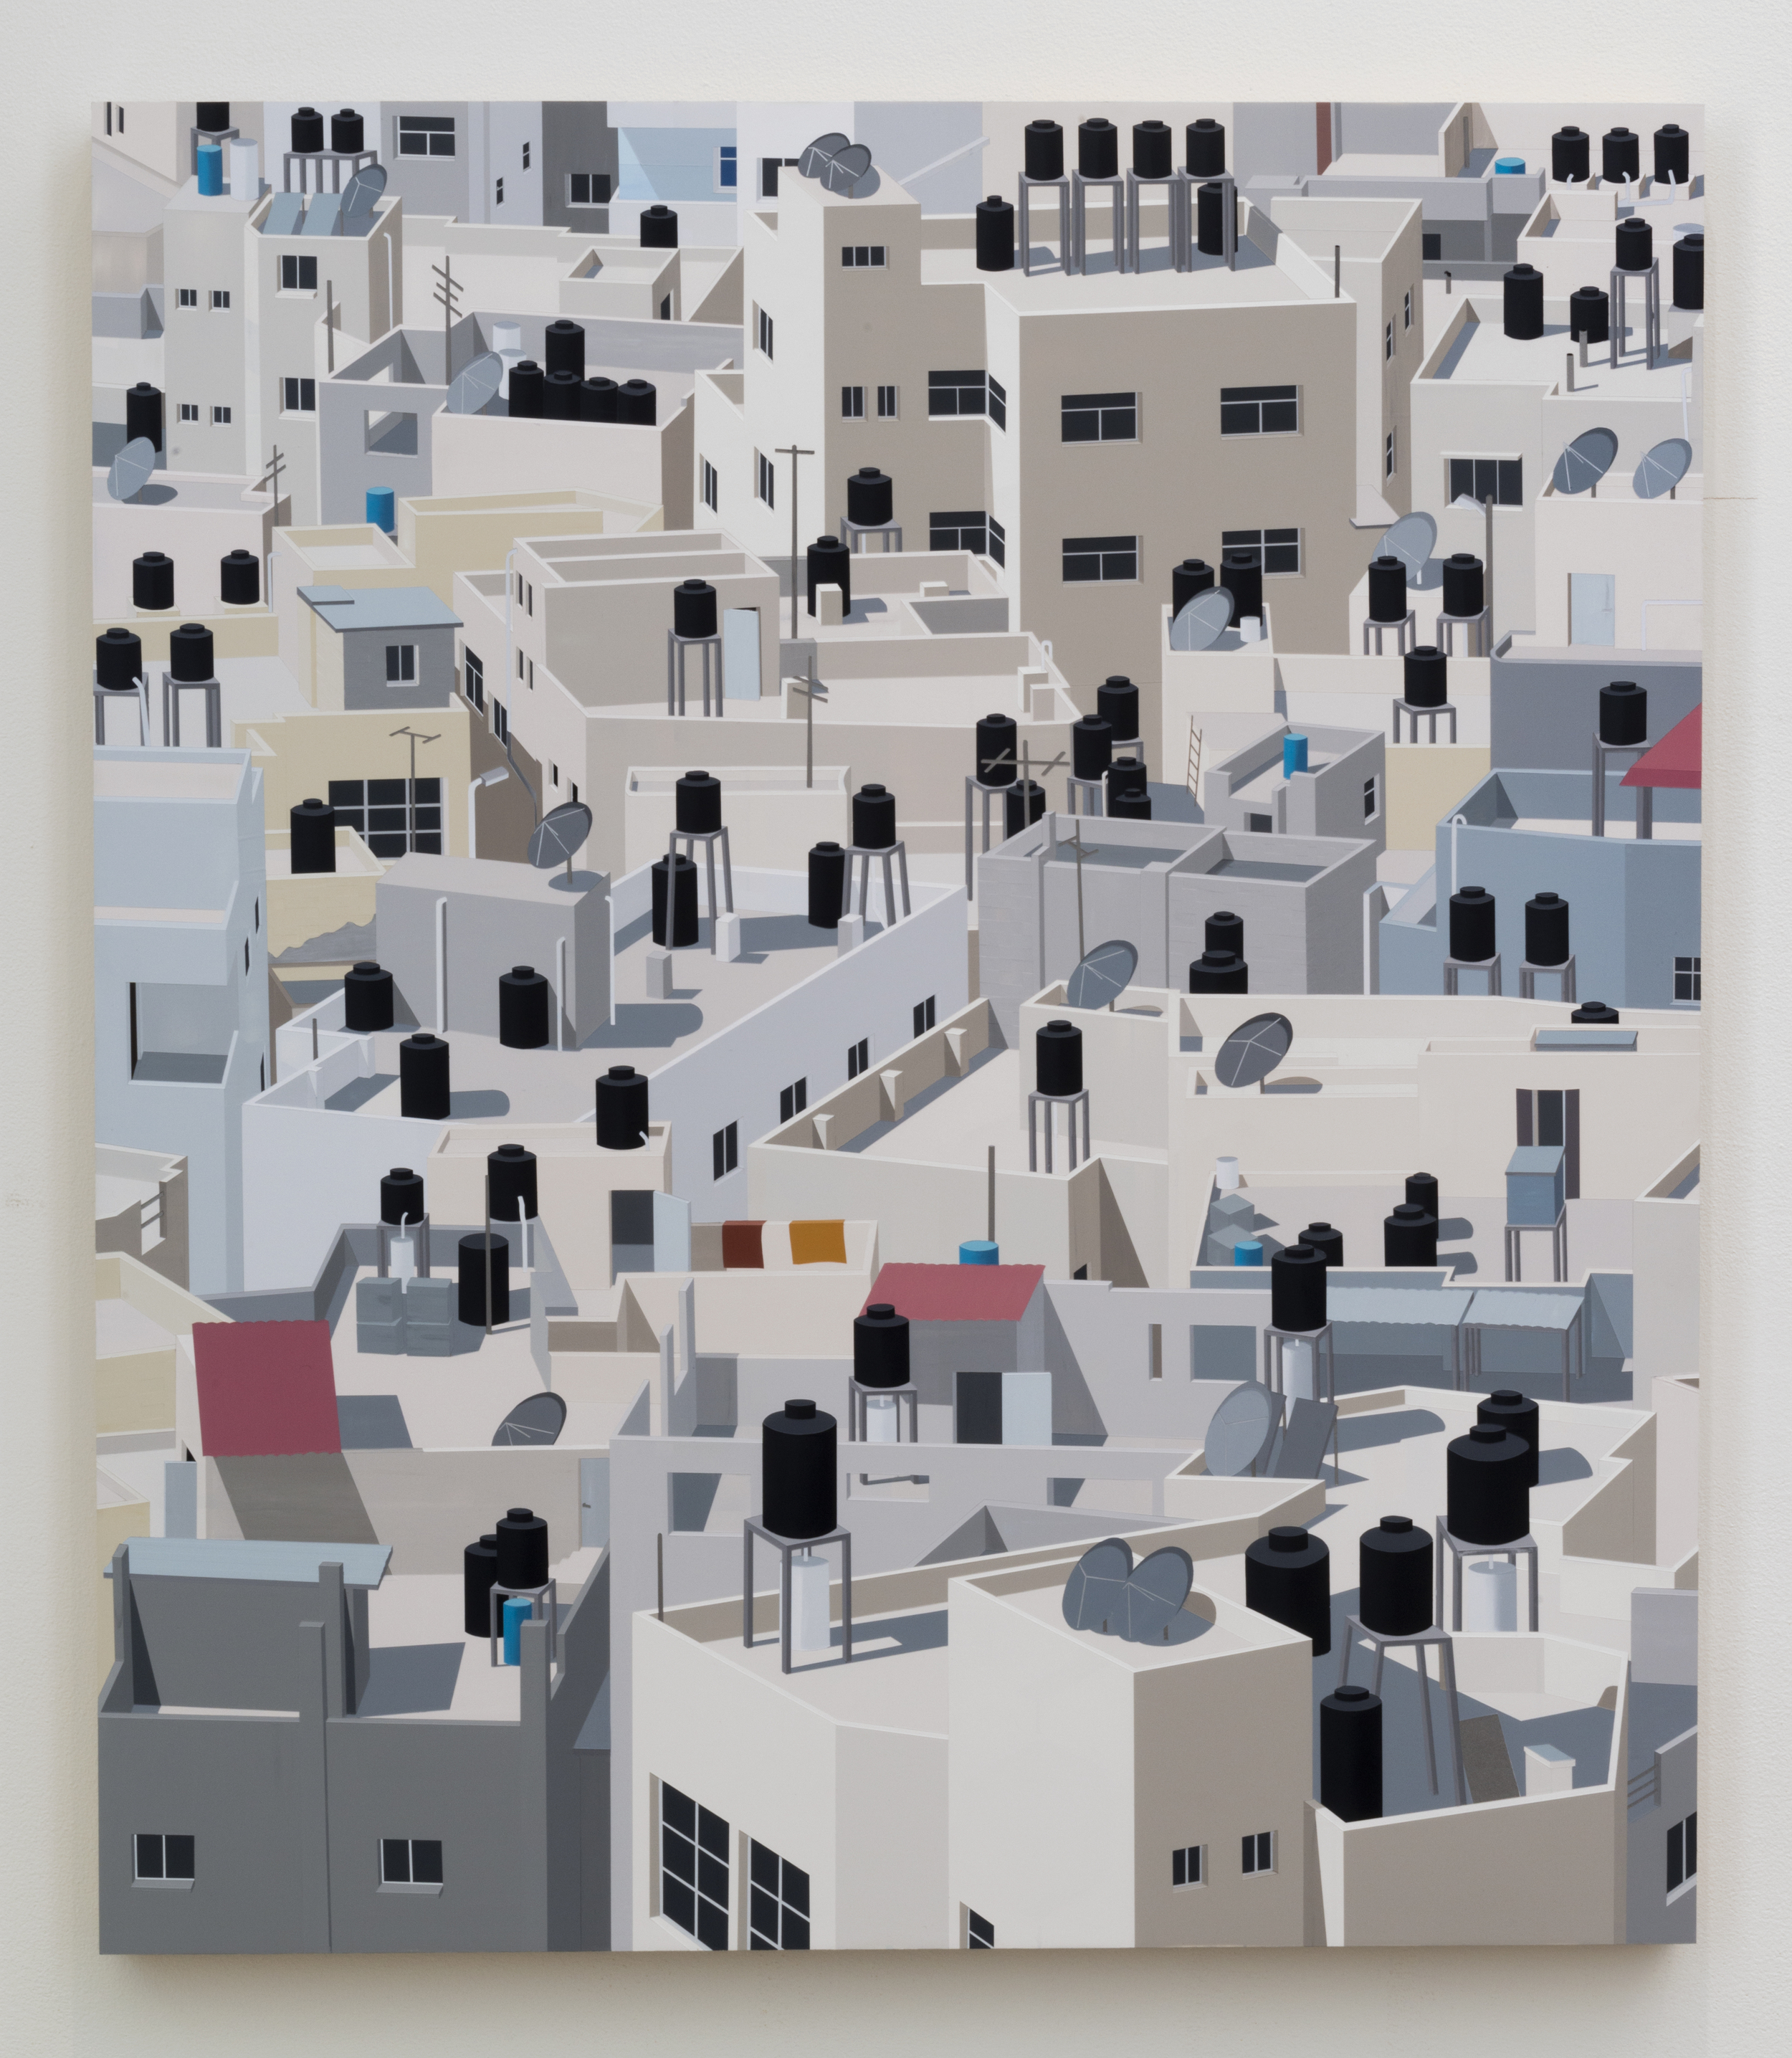 Jenin, West Bank, 2016. Acrylic on Dibond, 40 x 38"